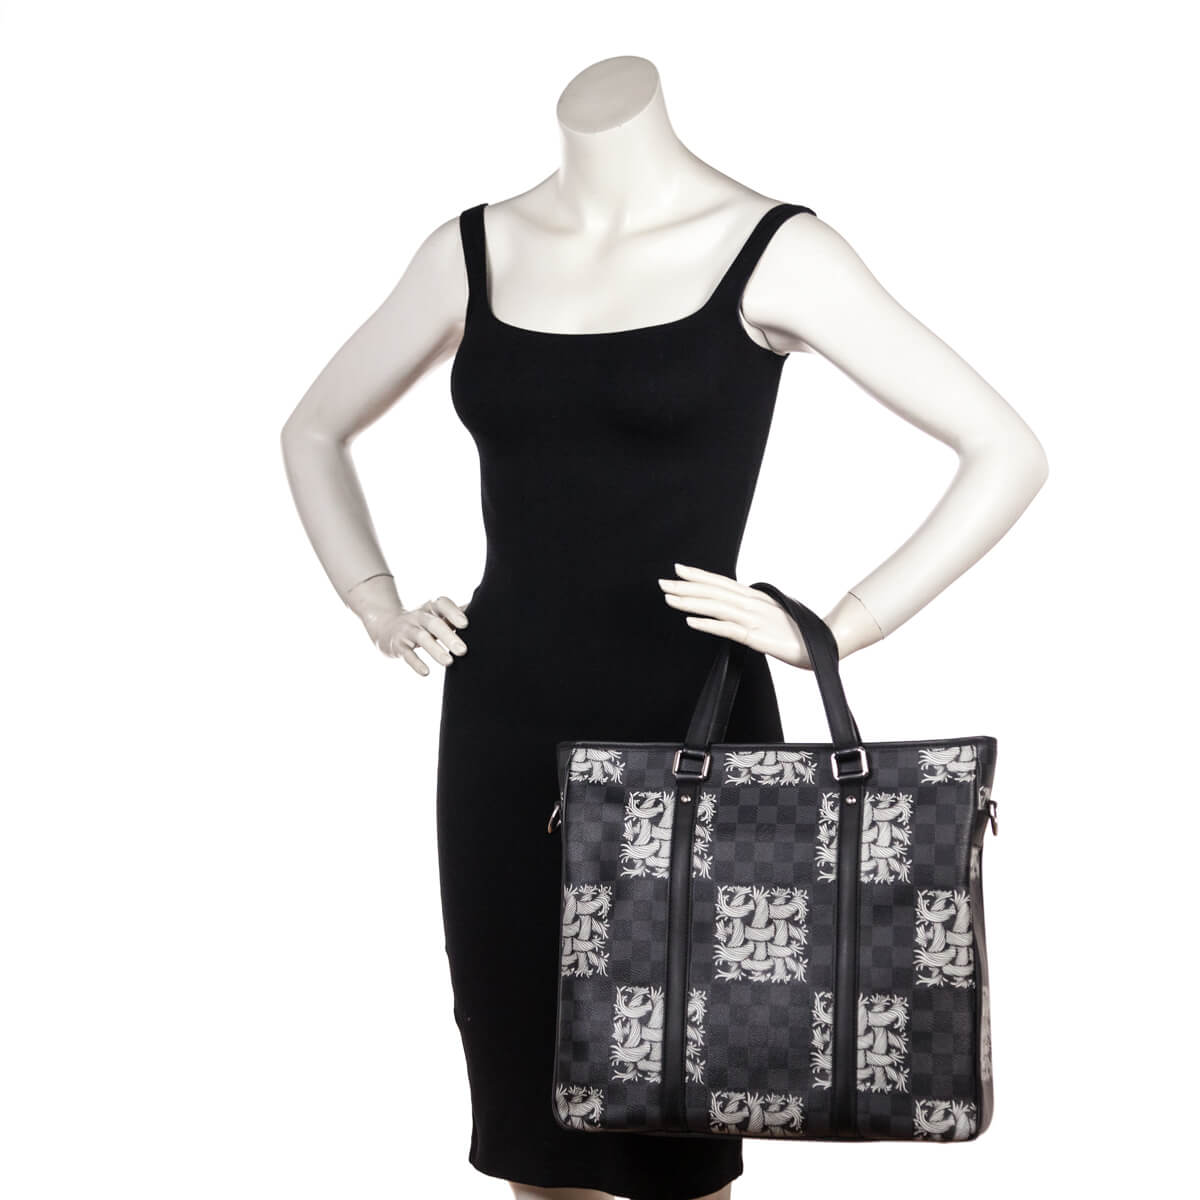 Louis Vuitton x Christopher Nemeth Damier Graphite Tadao PM - Love that Bag etc - Preowned Authentic Designer Handbags & Preloved Fashions